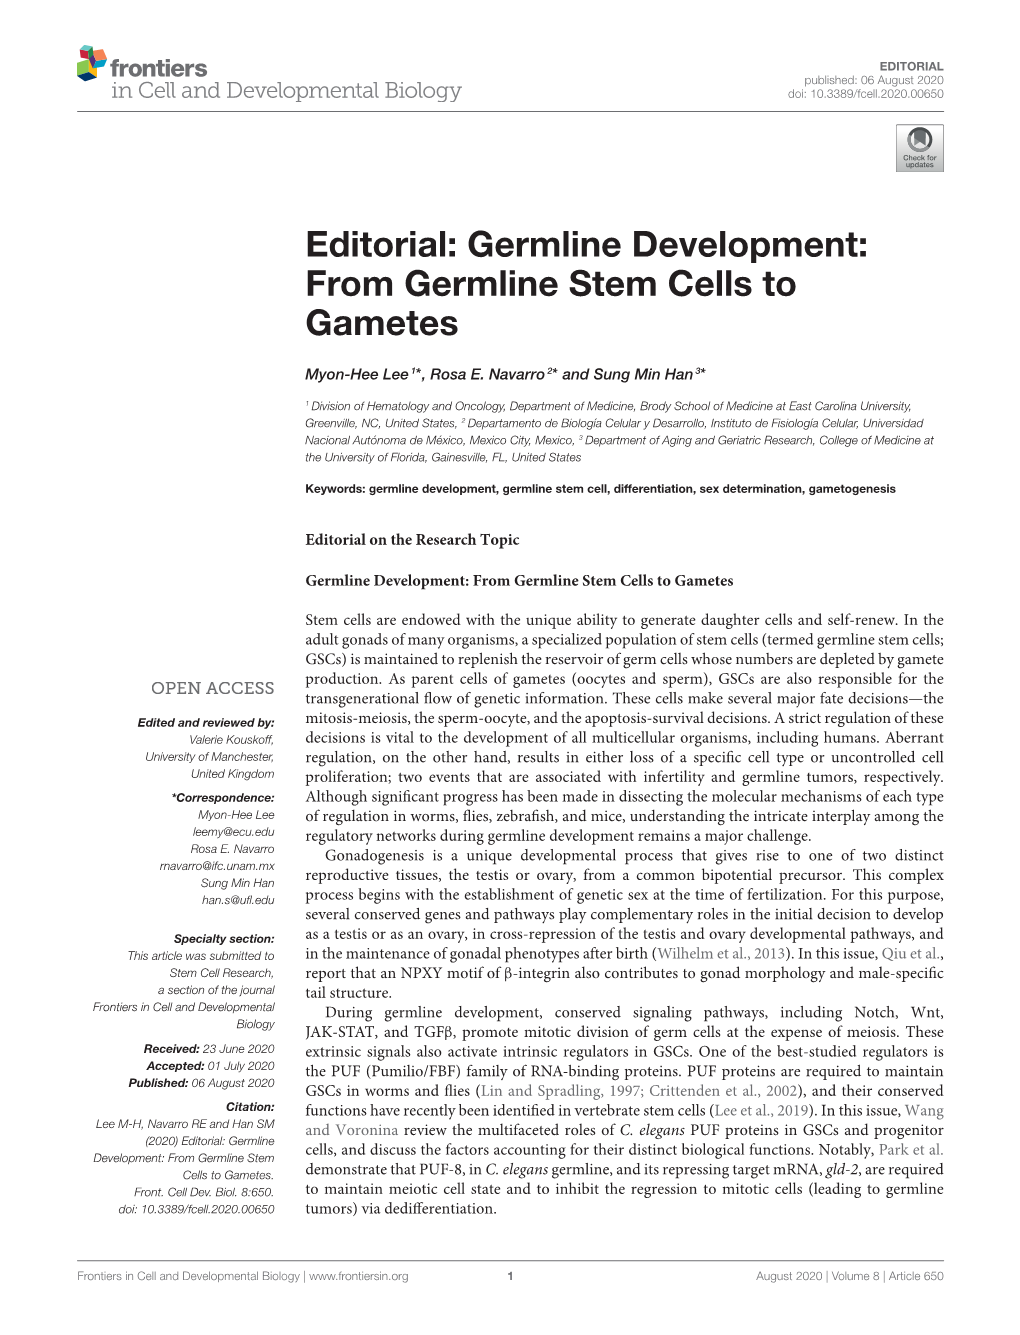 Editorial: Germline Development: from Germline Stem Cells to Gametes